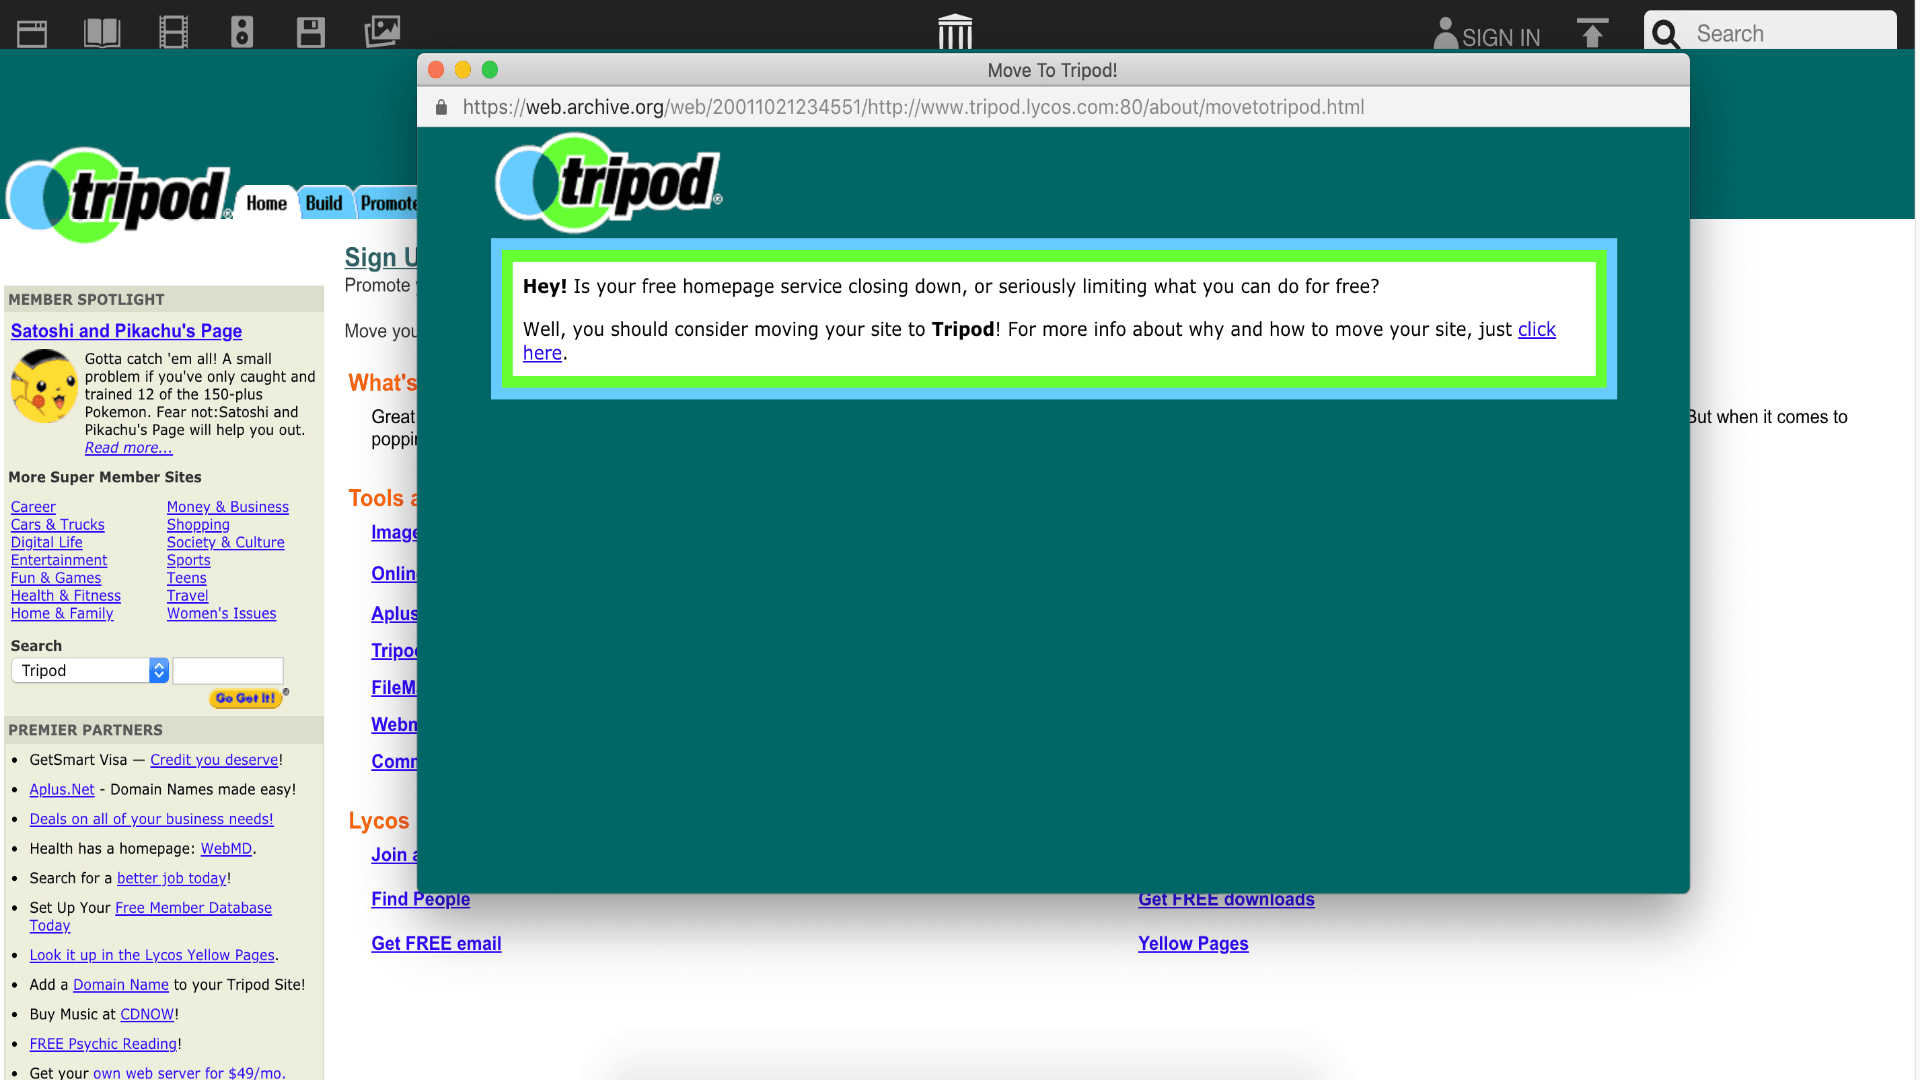 tripod.com pop-up from year 2000 ( via Wayback Machine)